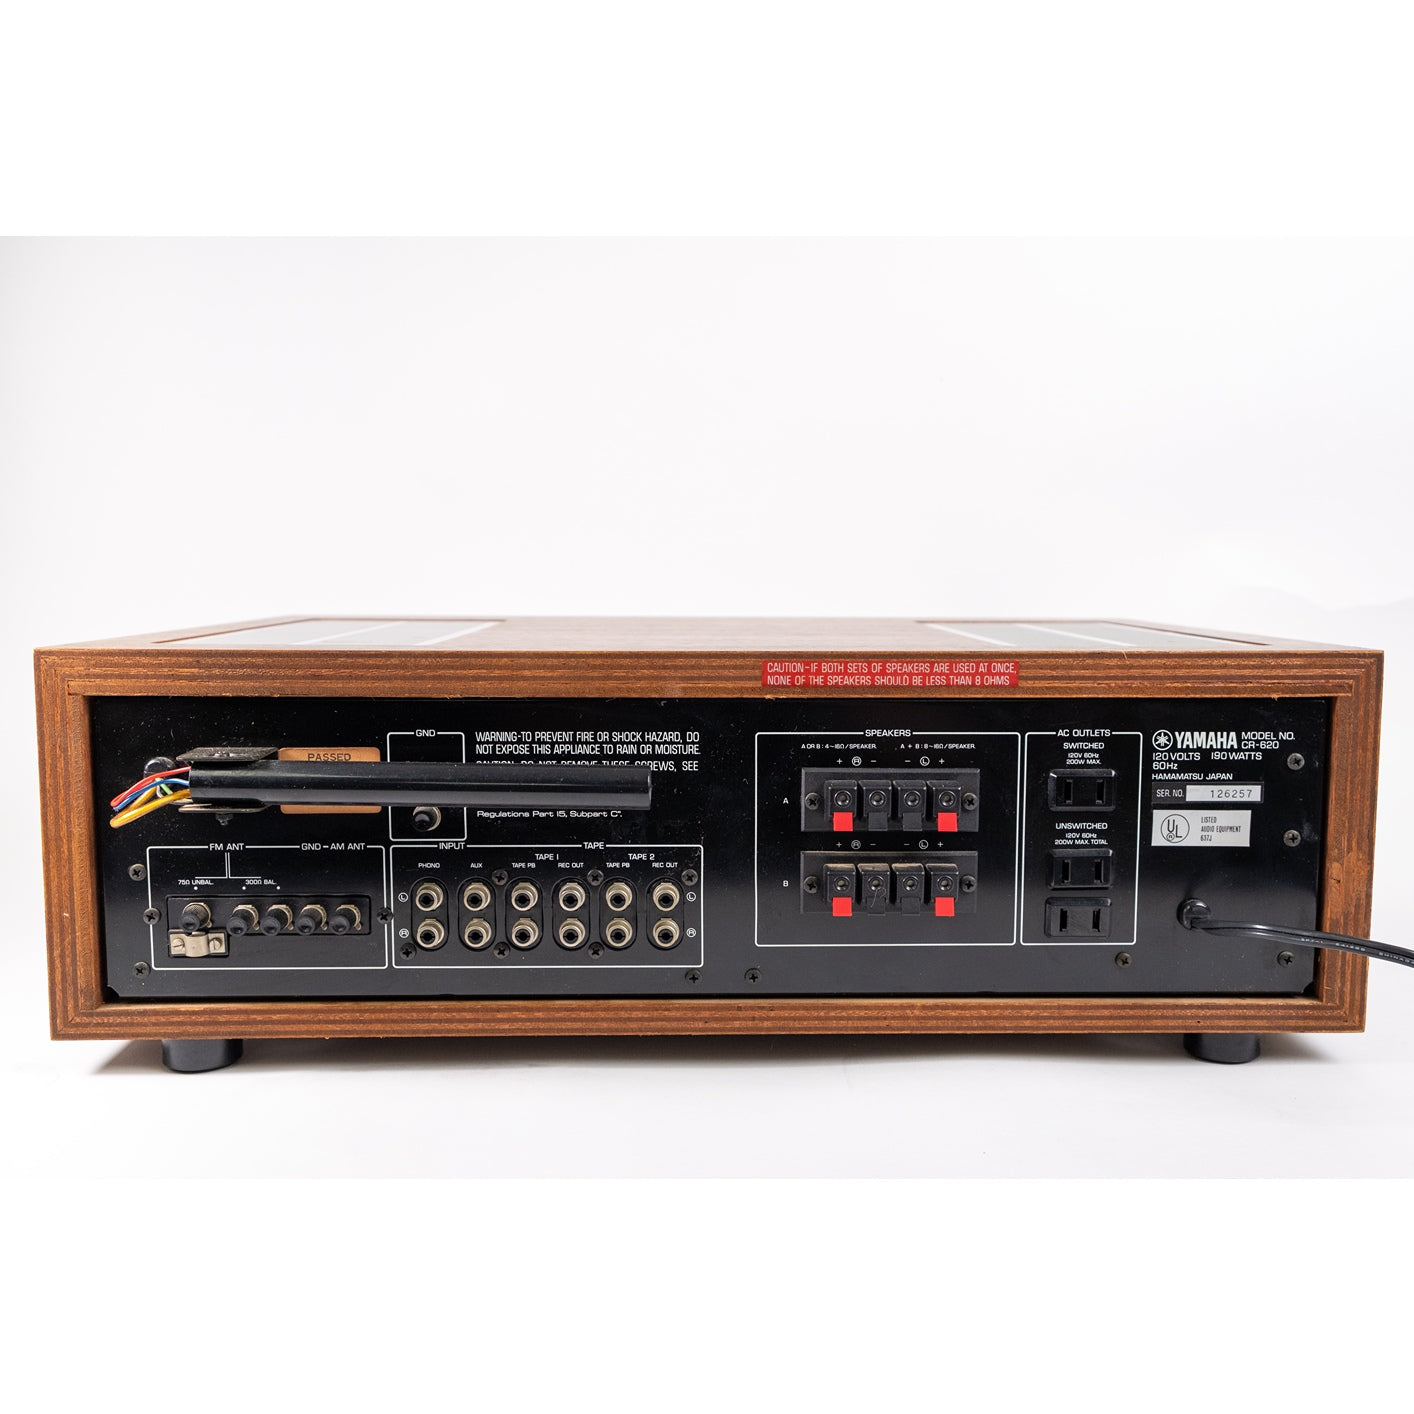 Yamaha CR-620 AM/FM Stereo Receiver